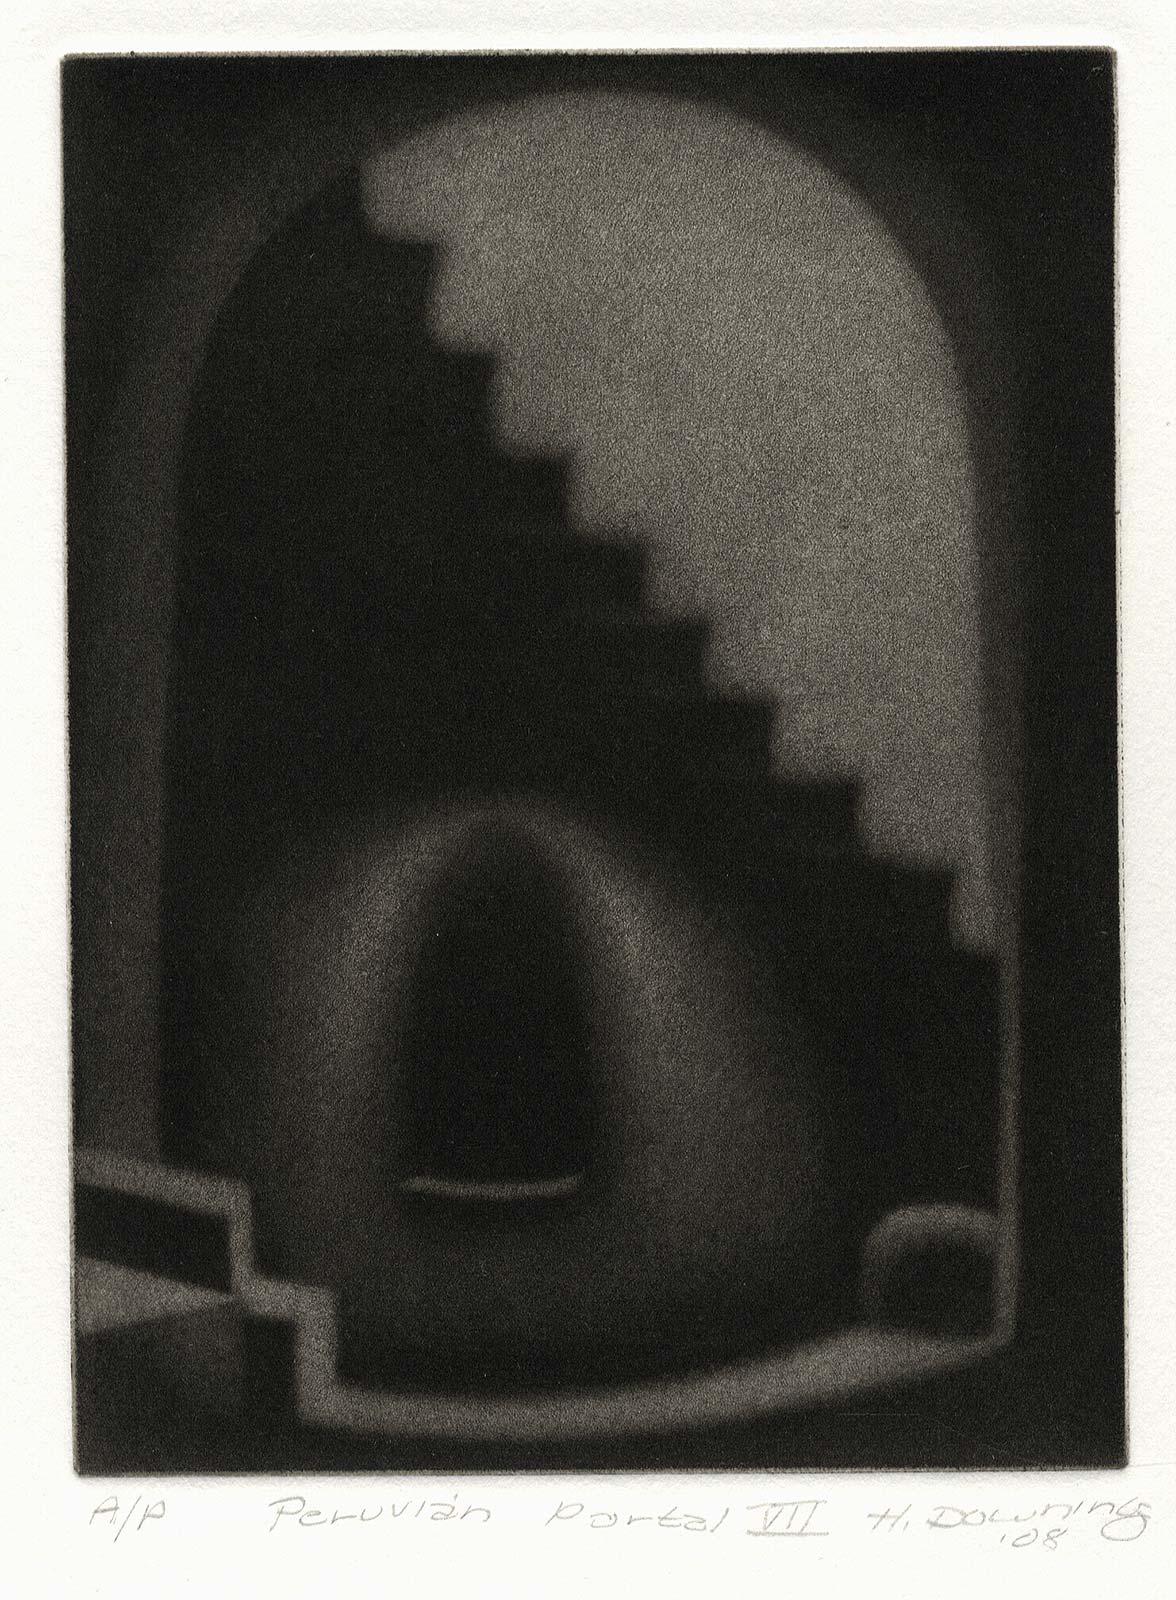 Peruvian Portal VII - Black Print by Holly Downing